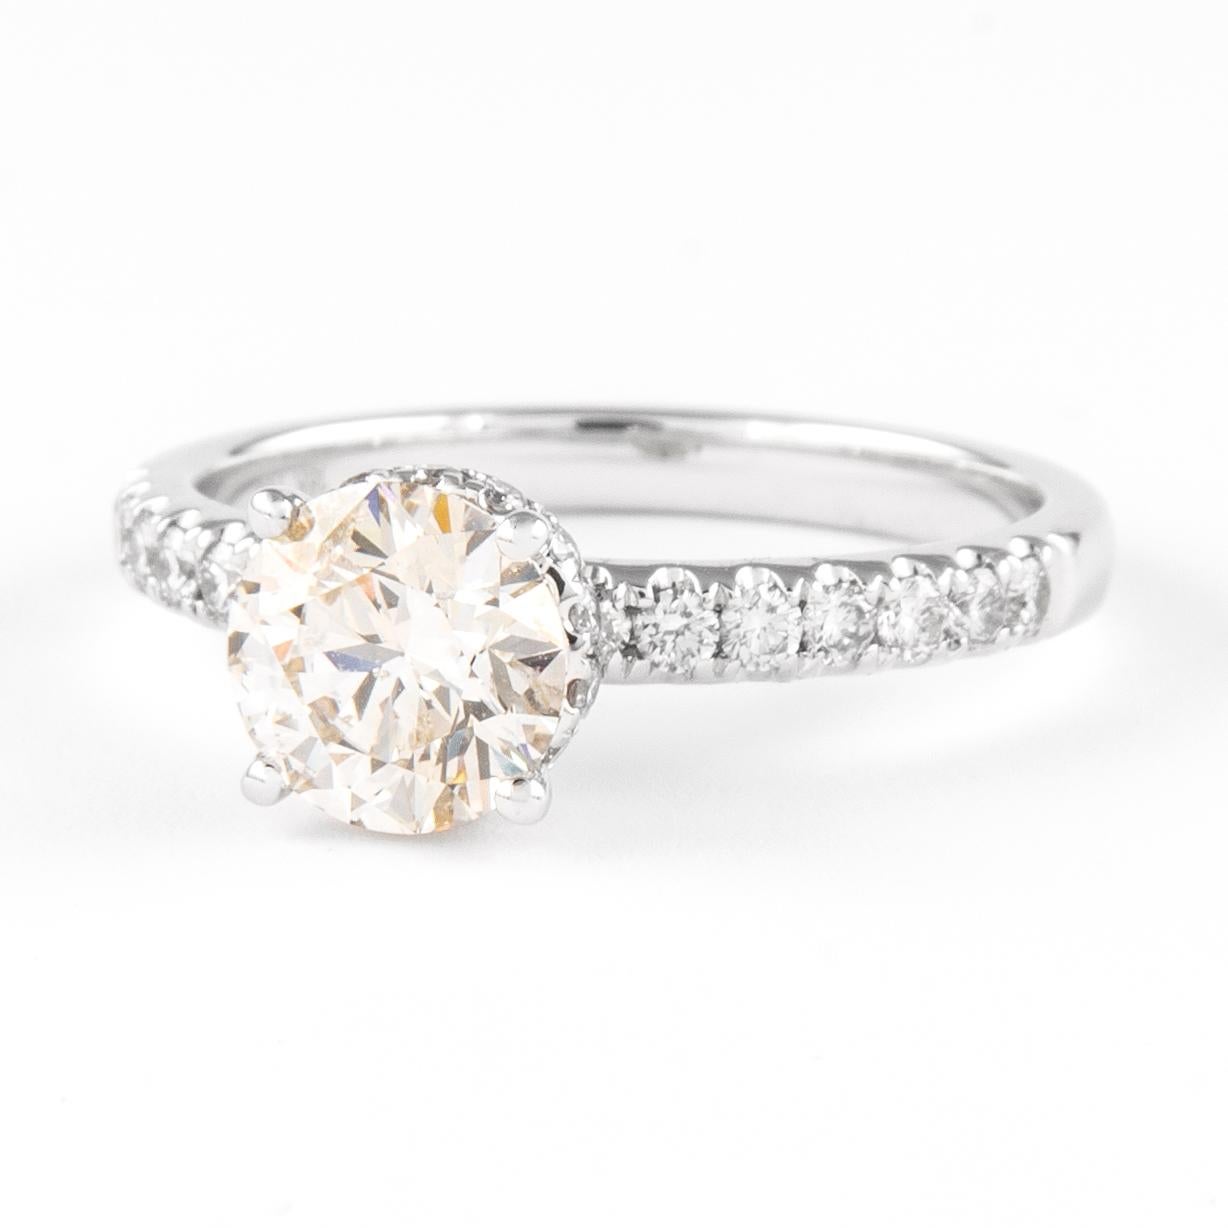 Contemporain Bague en or blanc 18 carats avec diamants ronds brillants de 1,20 carat certifiés EGL en vente